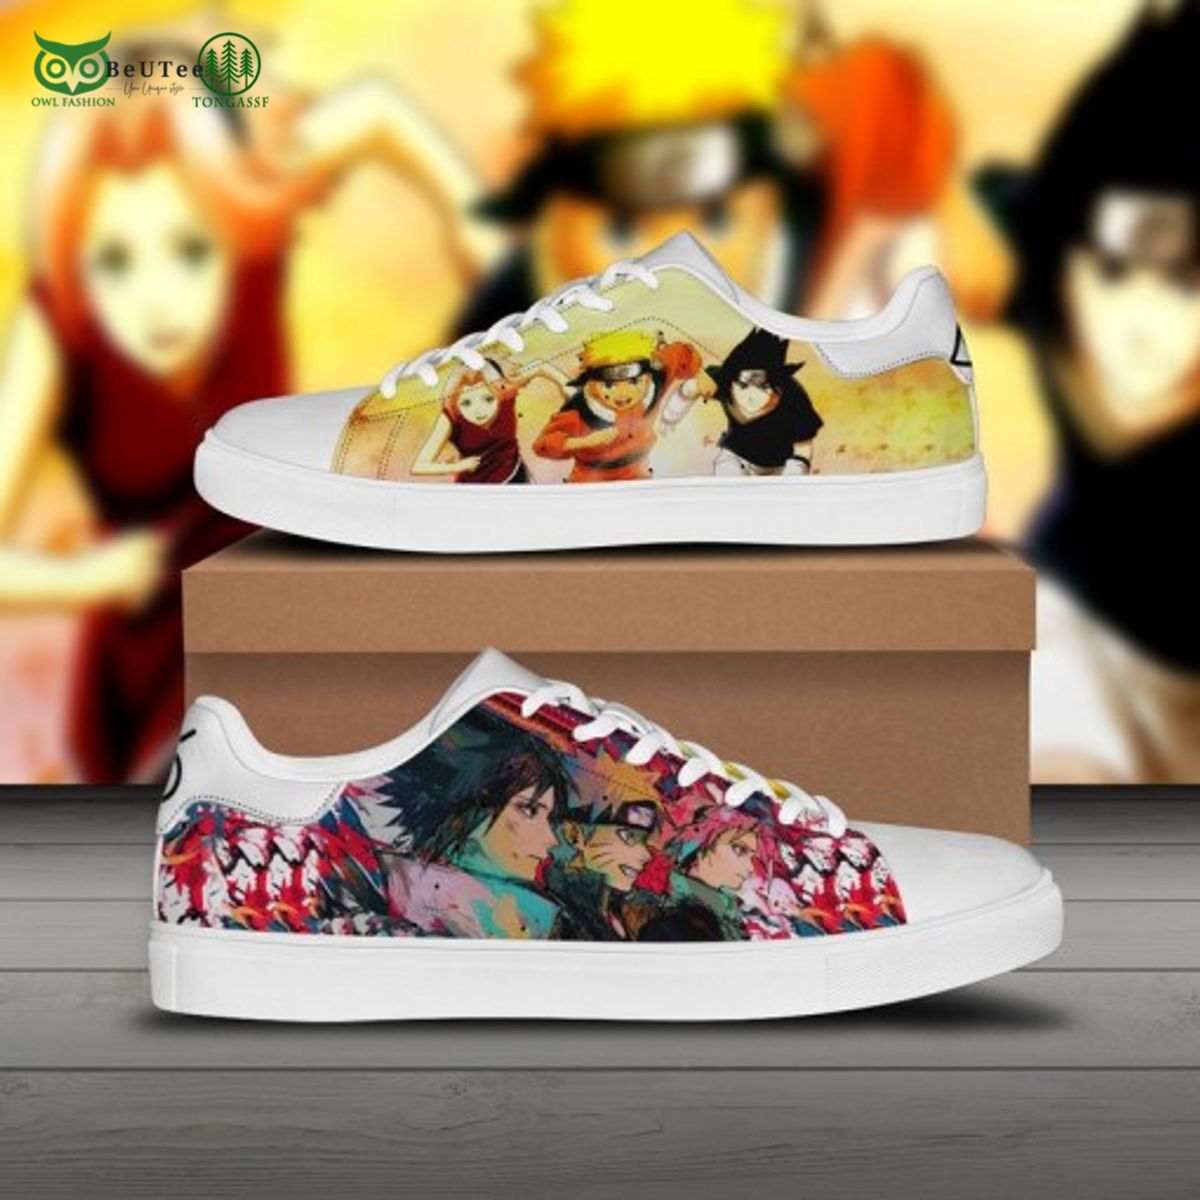 naruto skate sneakers custom naruto anime stan smith shoes 1 2rHR1